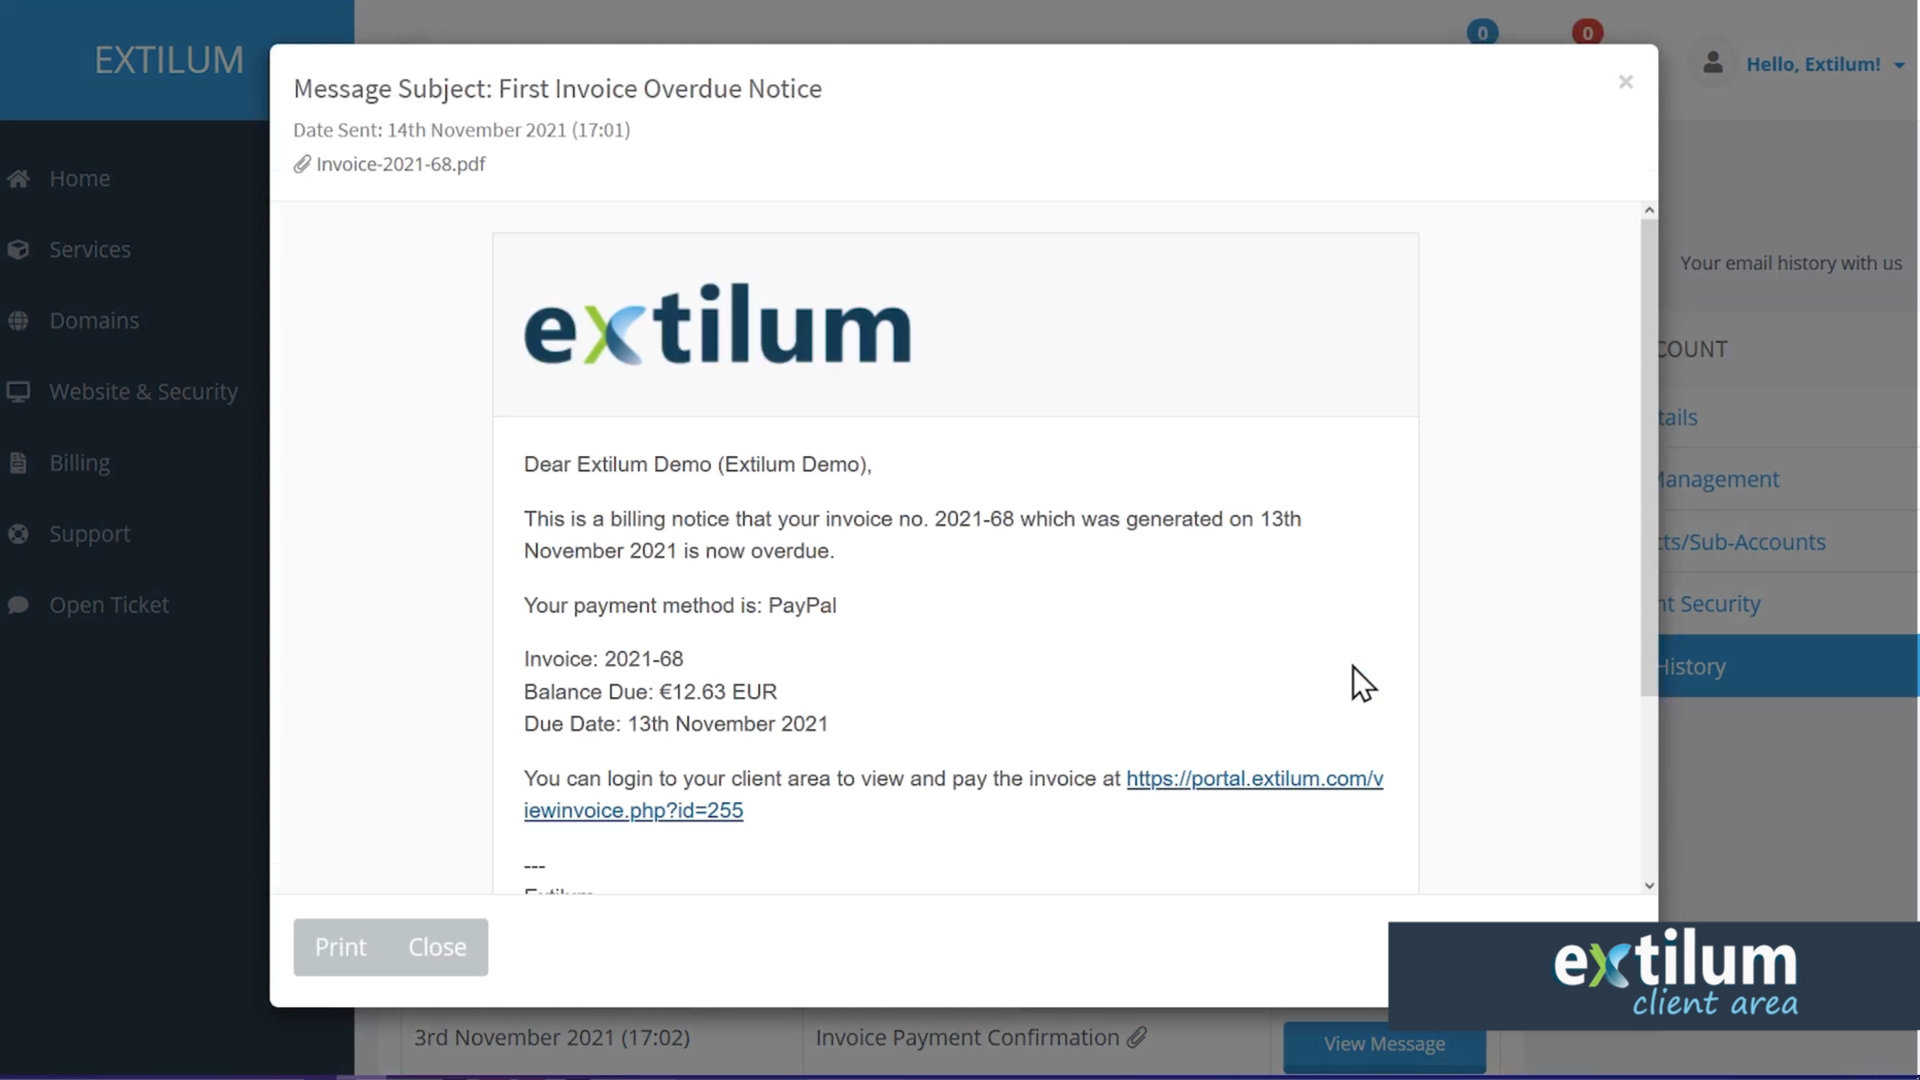 Extilum Client Area - Email History